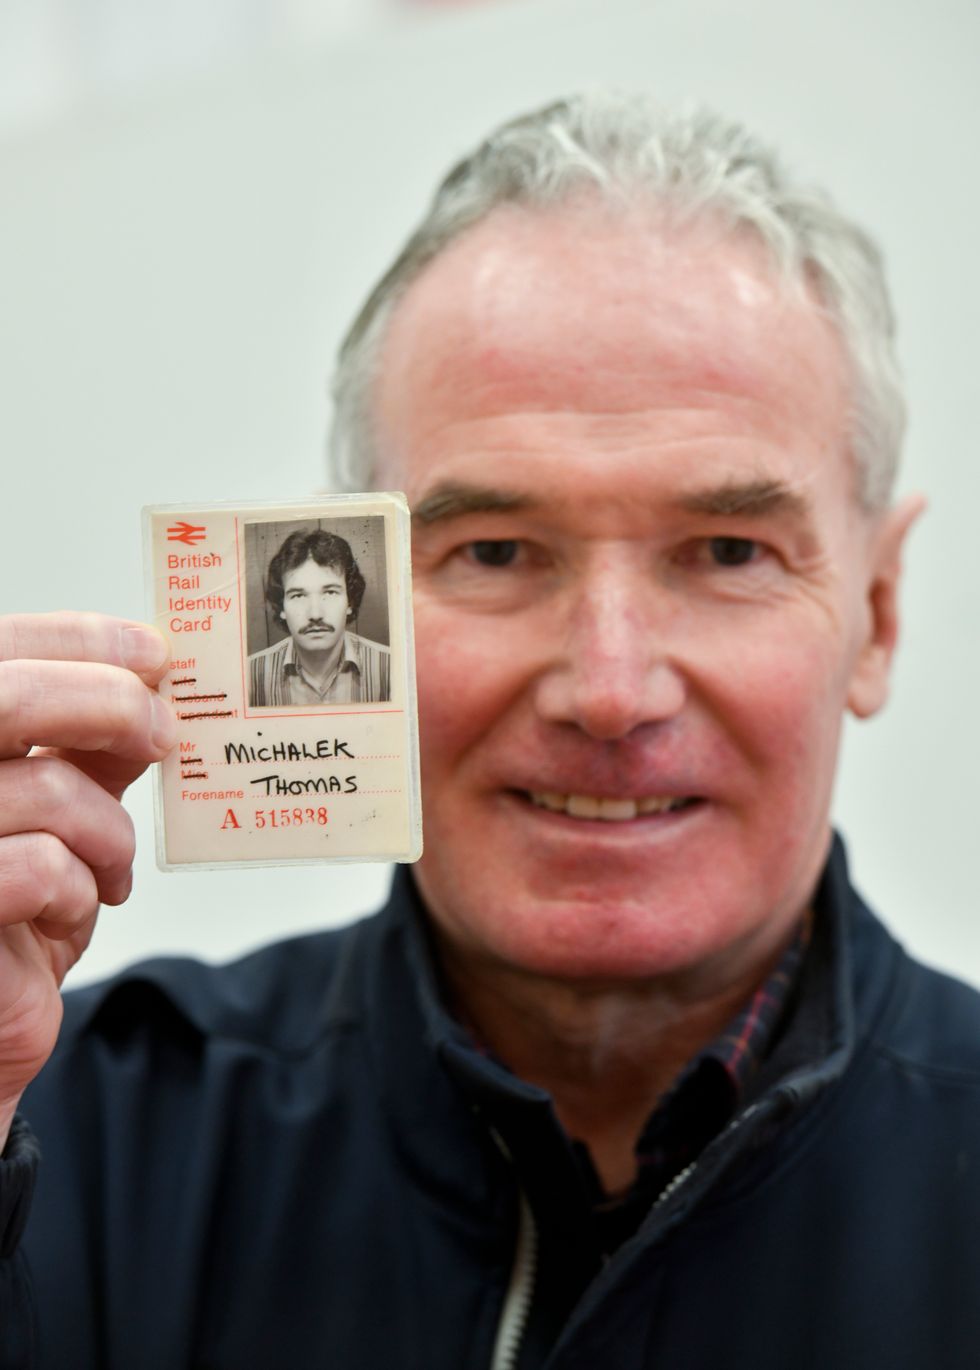 Tommy Michalek with his British Rail identity card